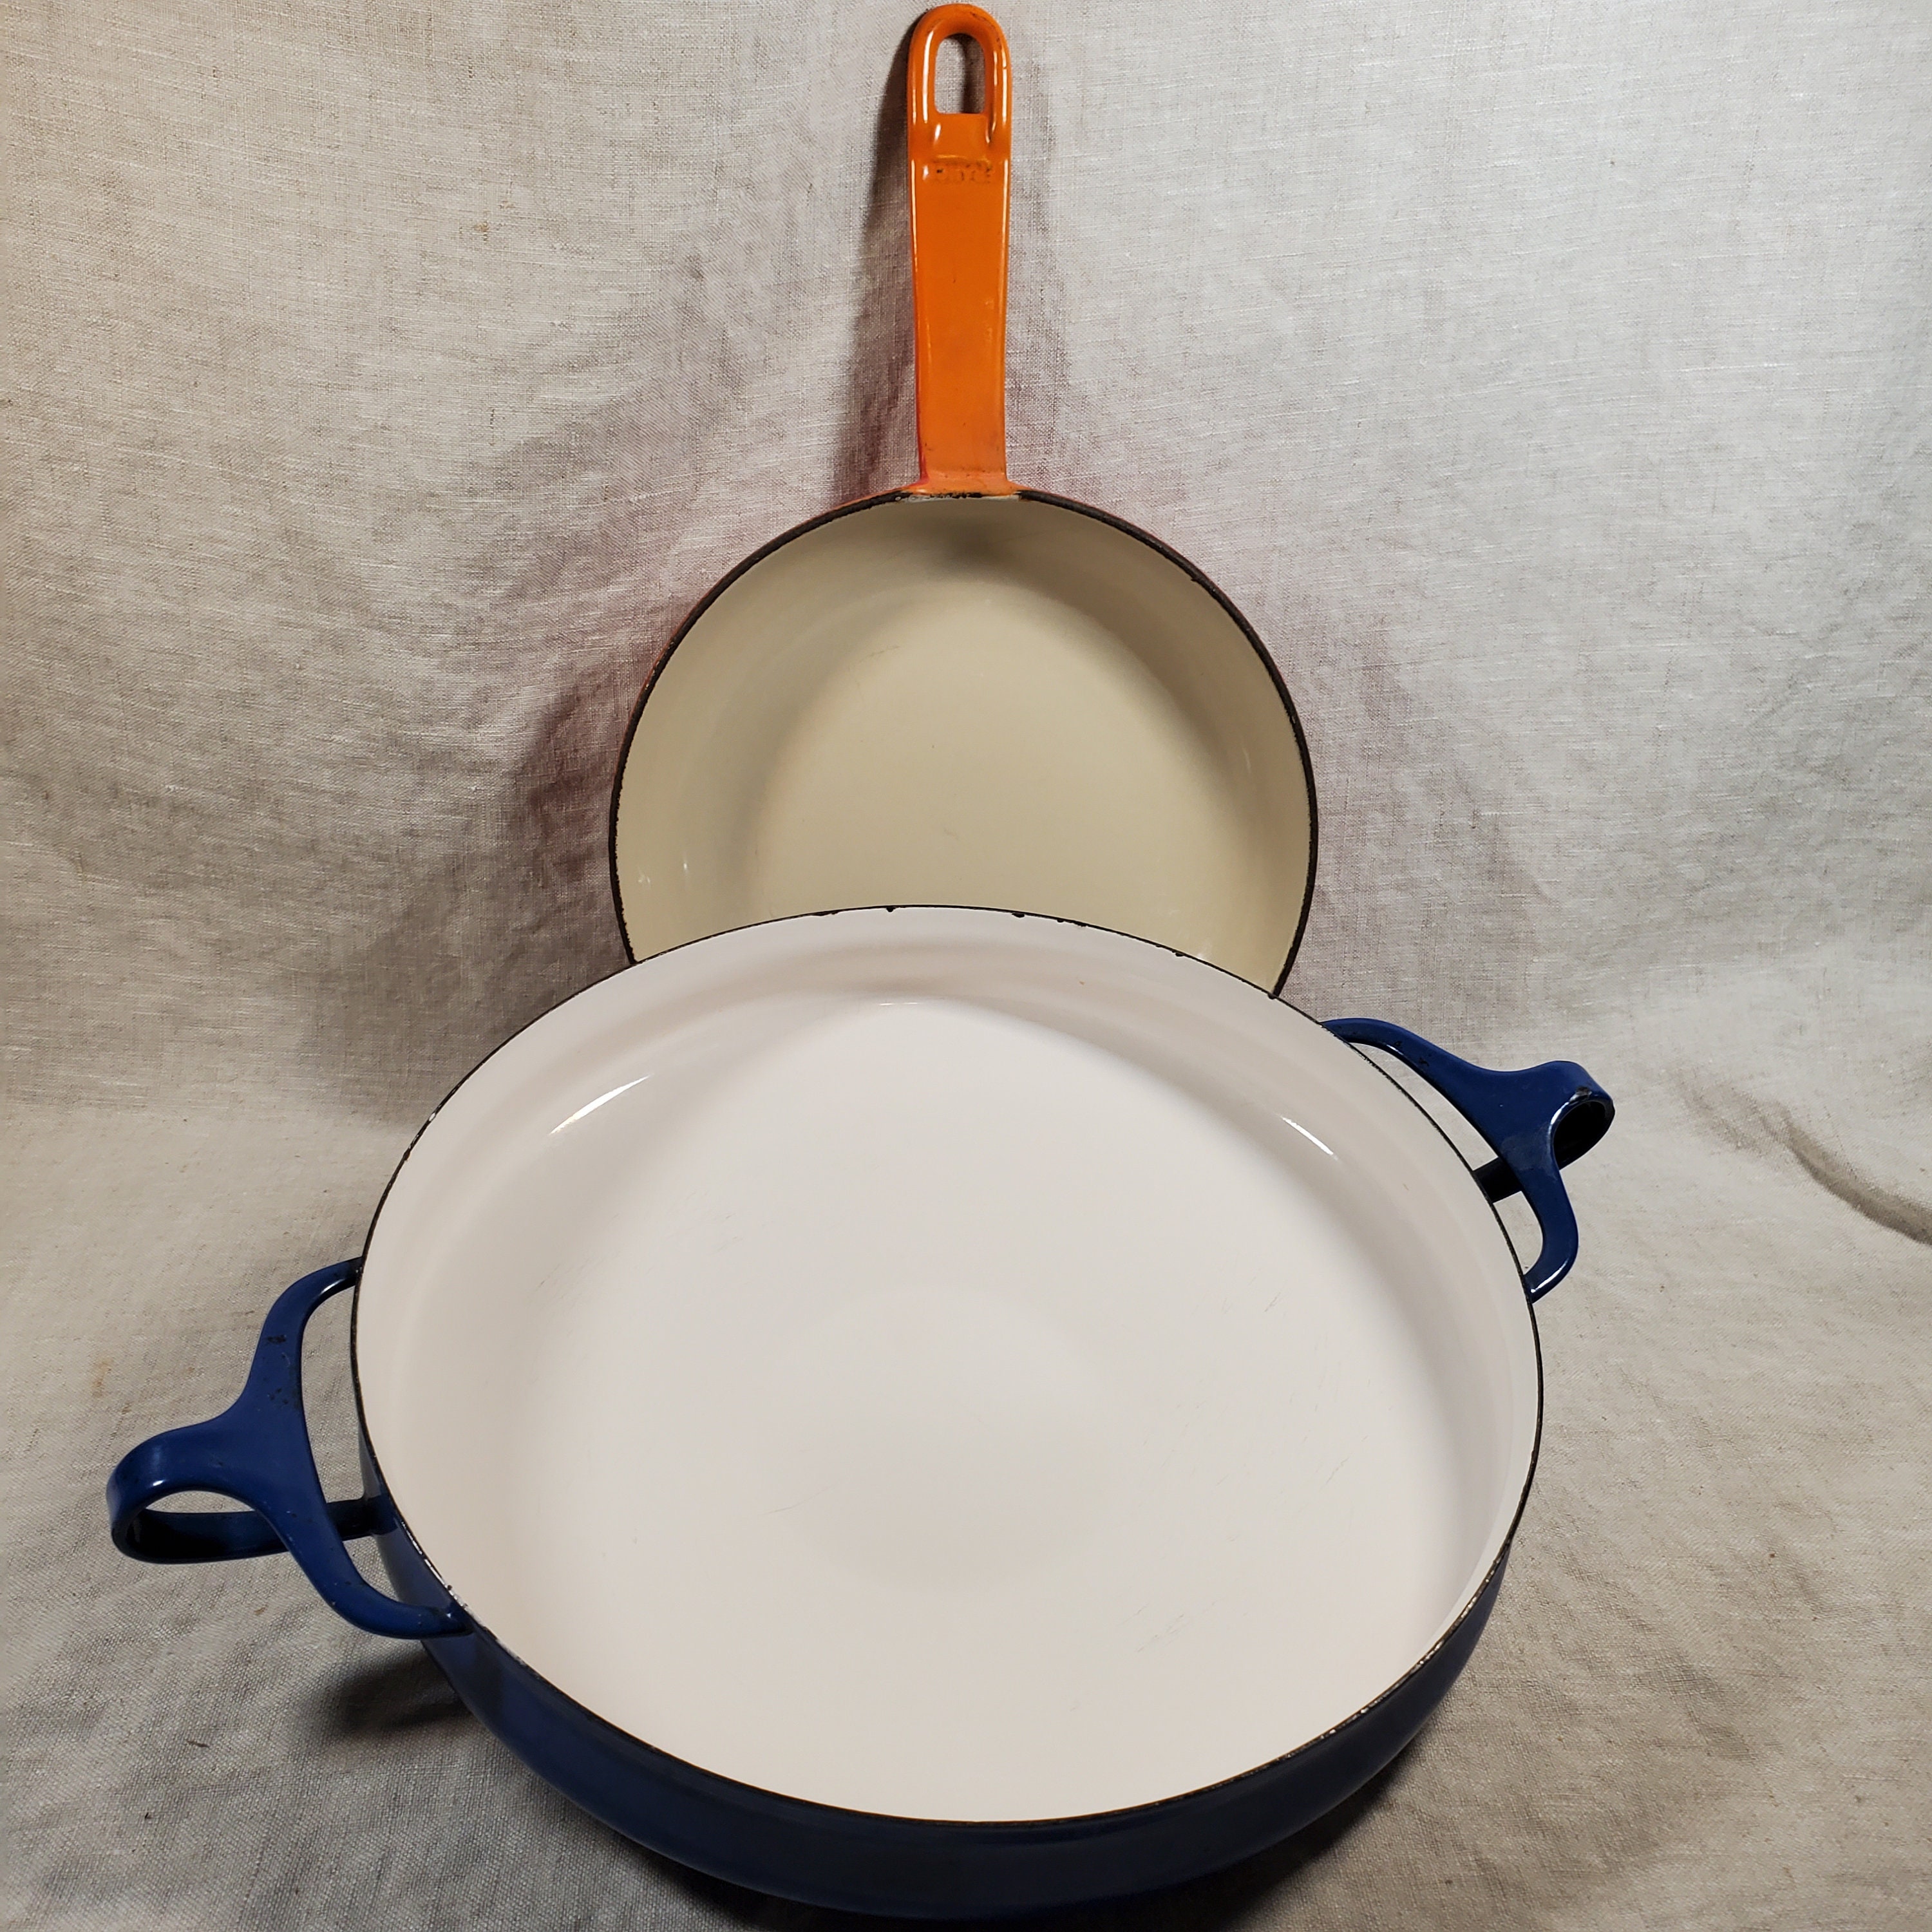 le Creuset #30 White Enamelware 12 inch Skillet Pan